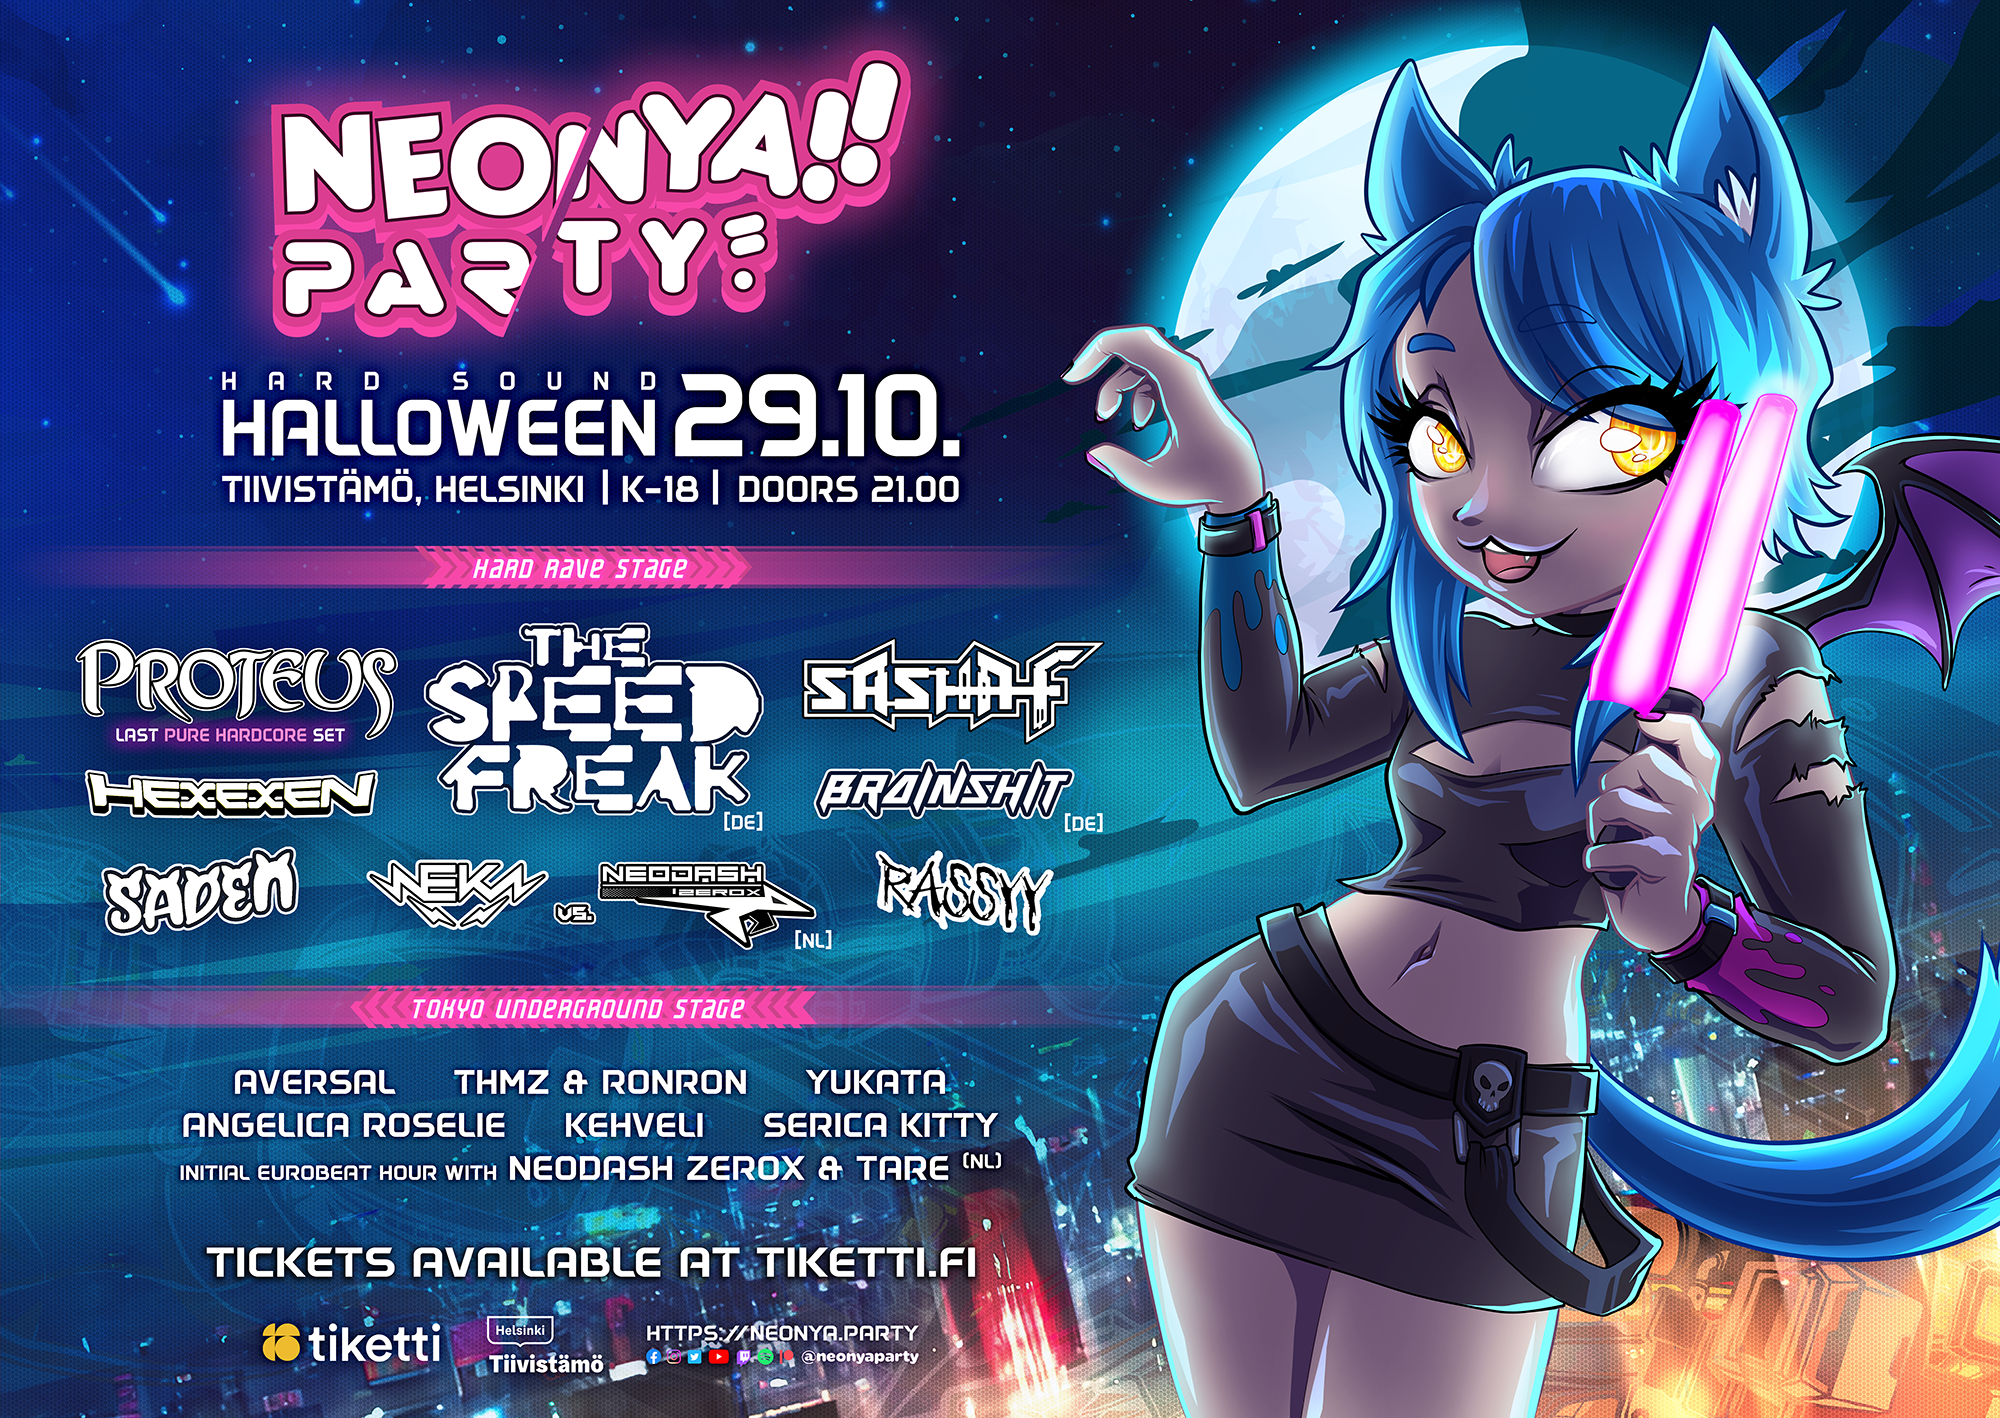 Neonya!! Party Hard Sound Halloween 2